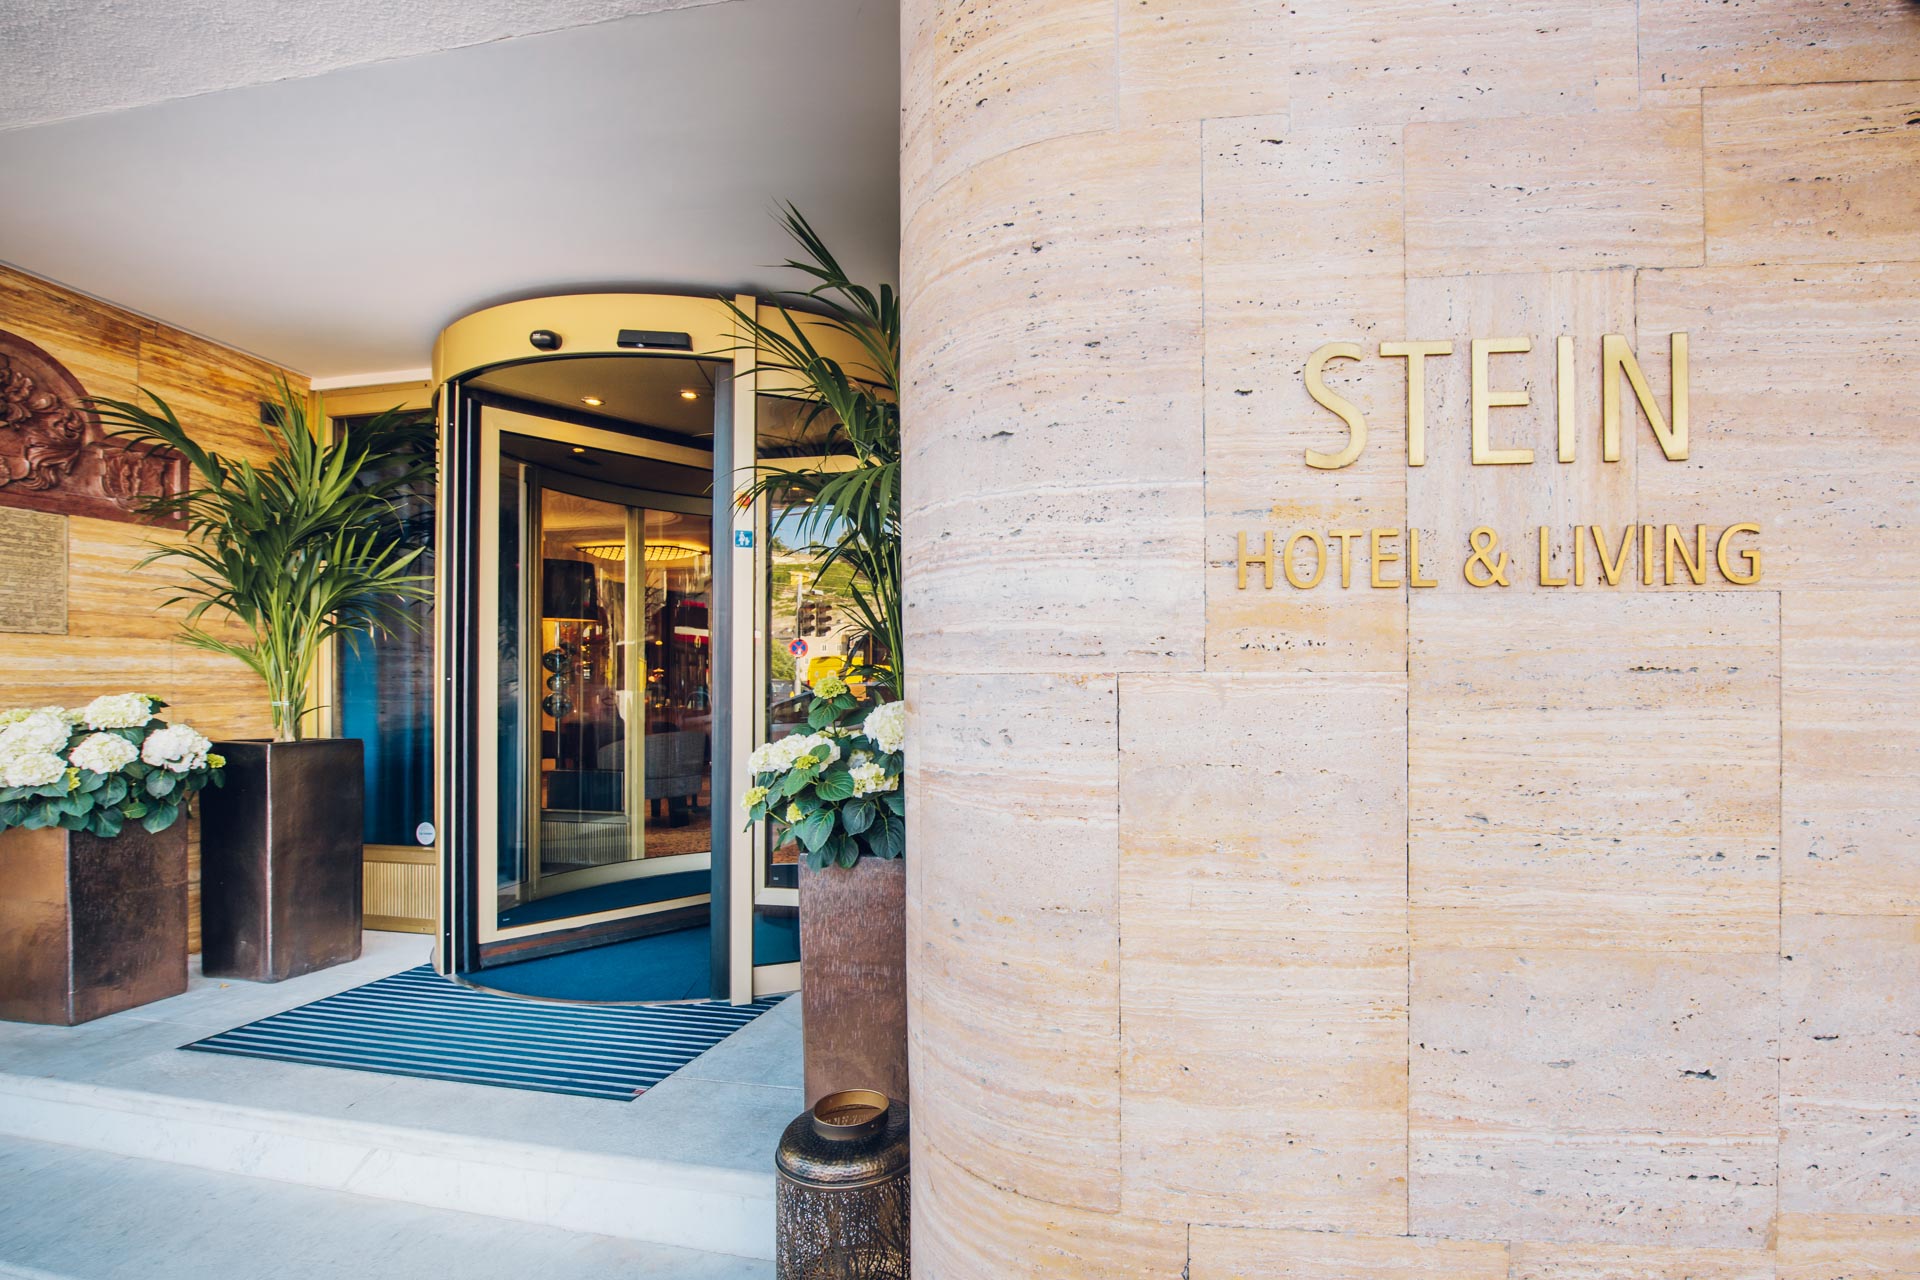 Hotel Stein Entrance